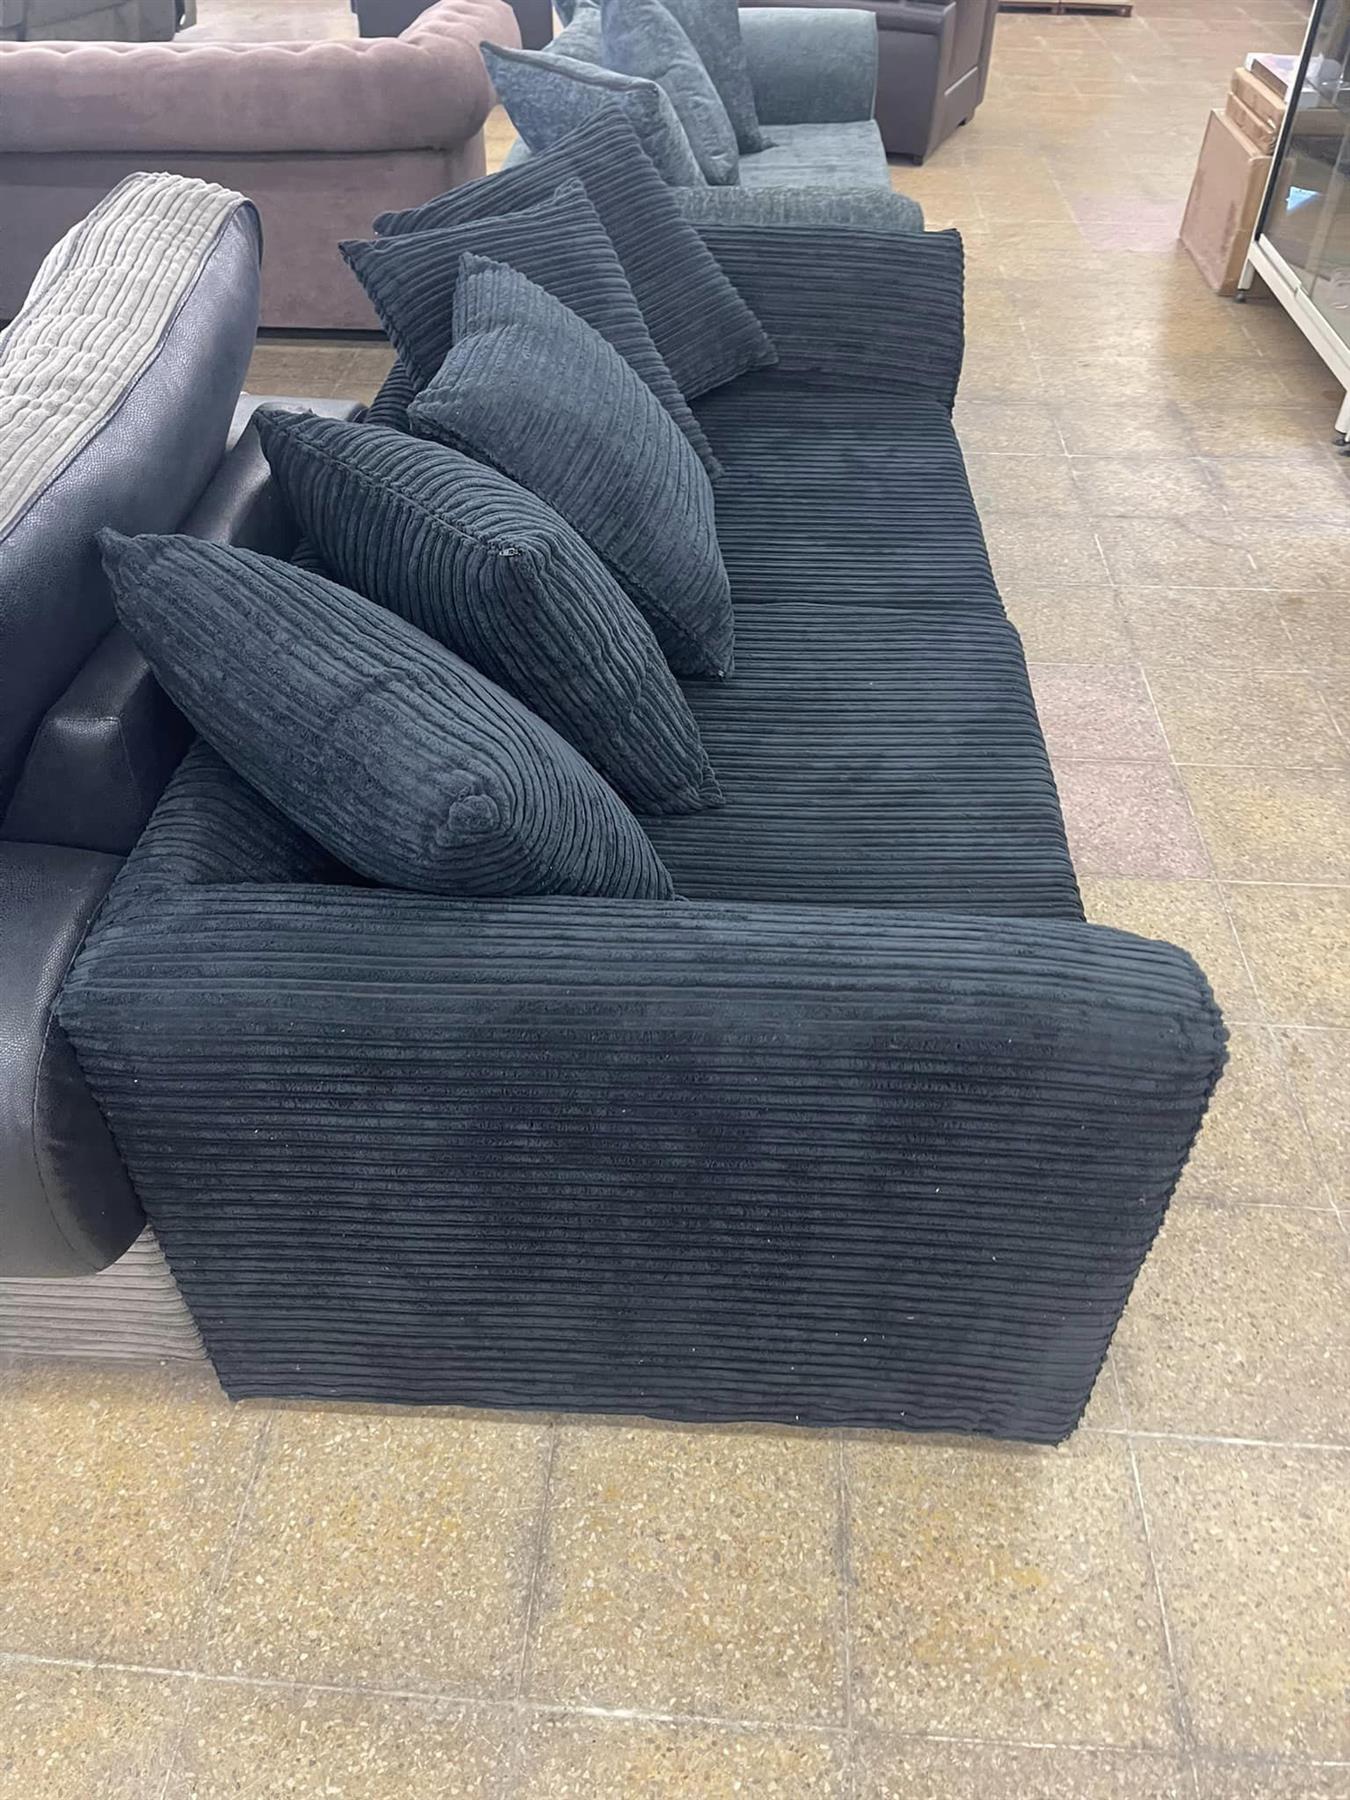 Black 3 Seater Corded Sofa